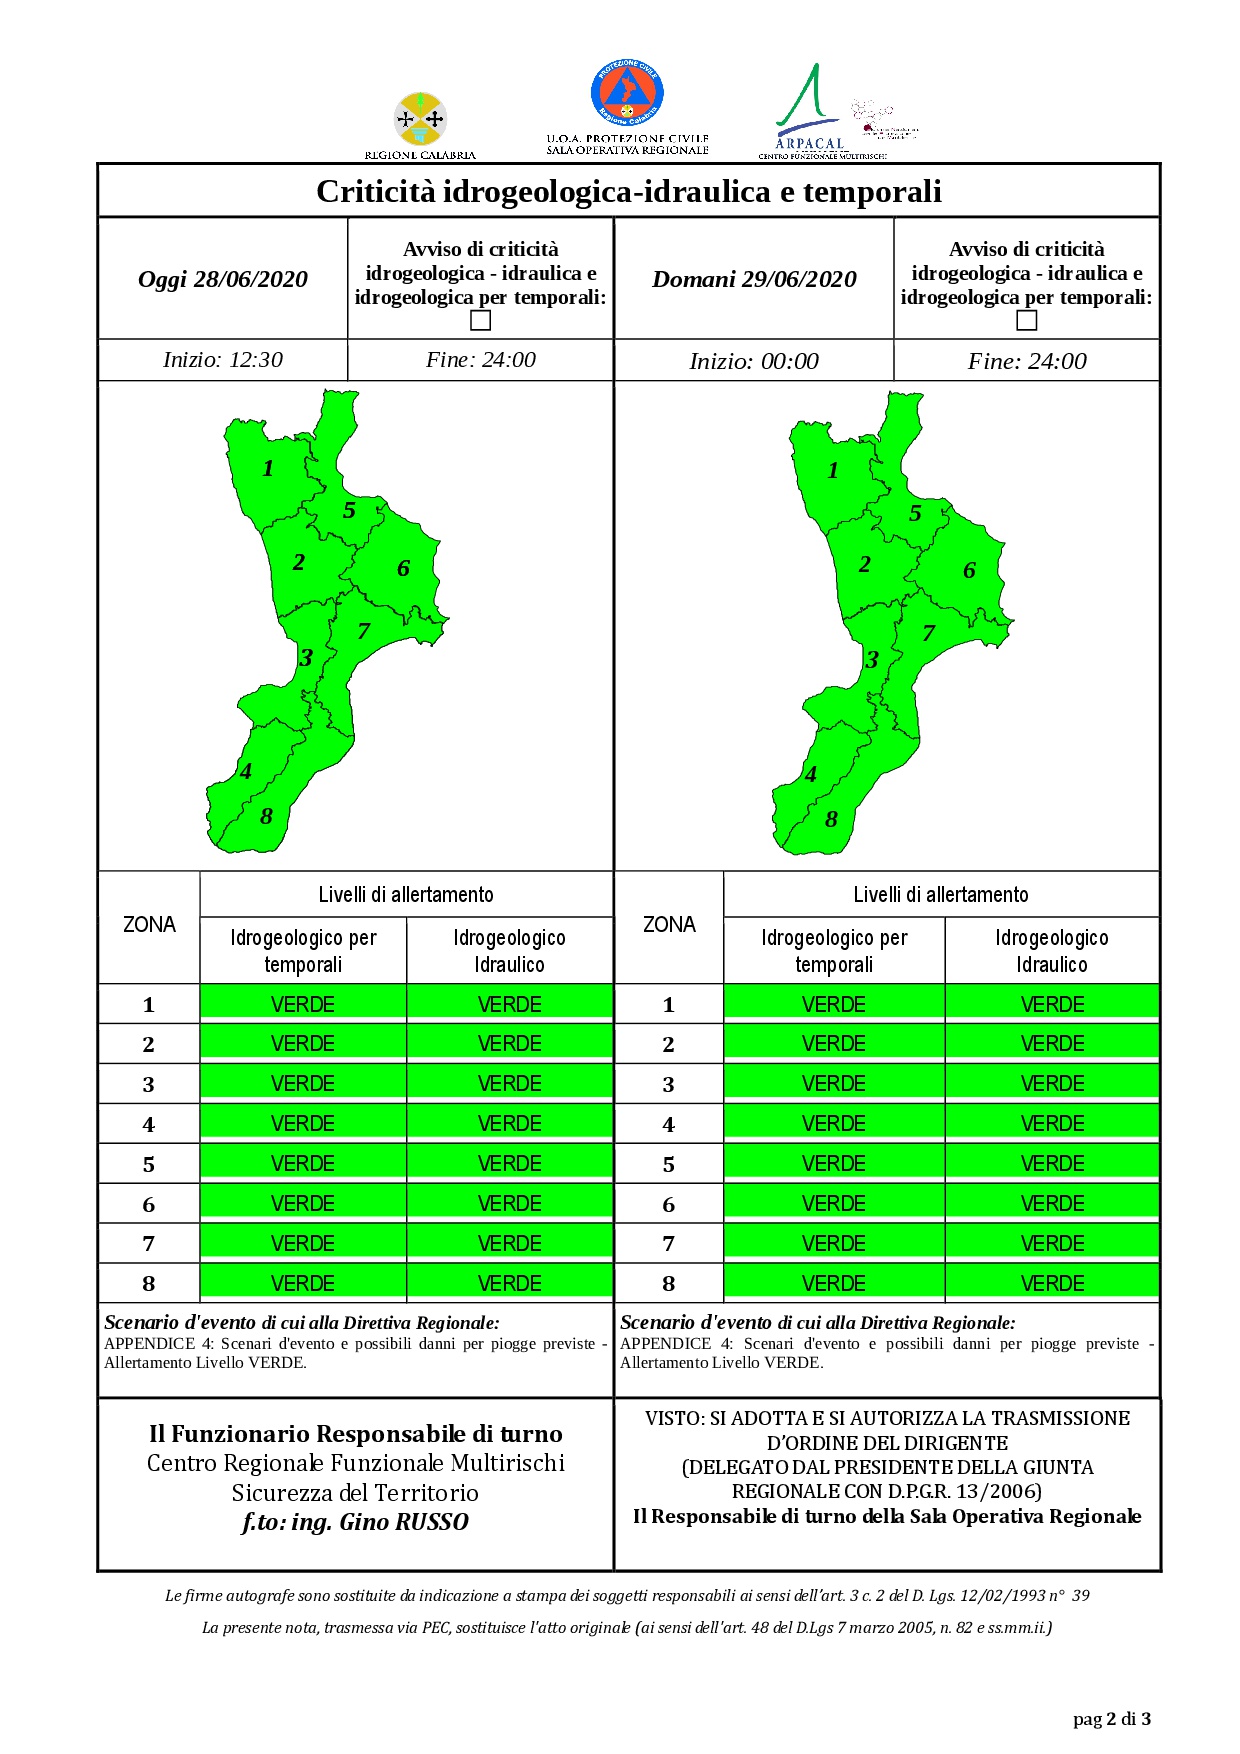 Criticità idrogeologica-idraulica e temporali in Calabria 28-06-2020